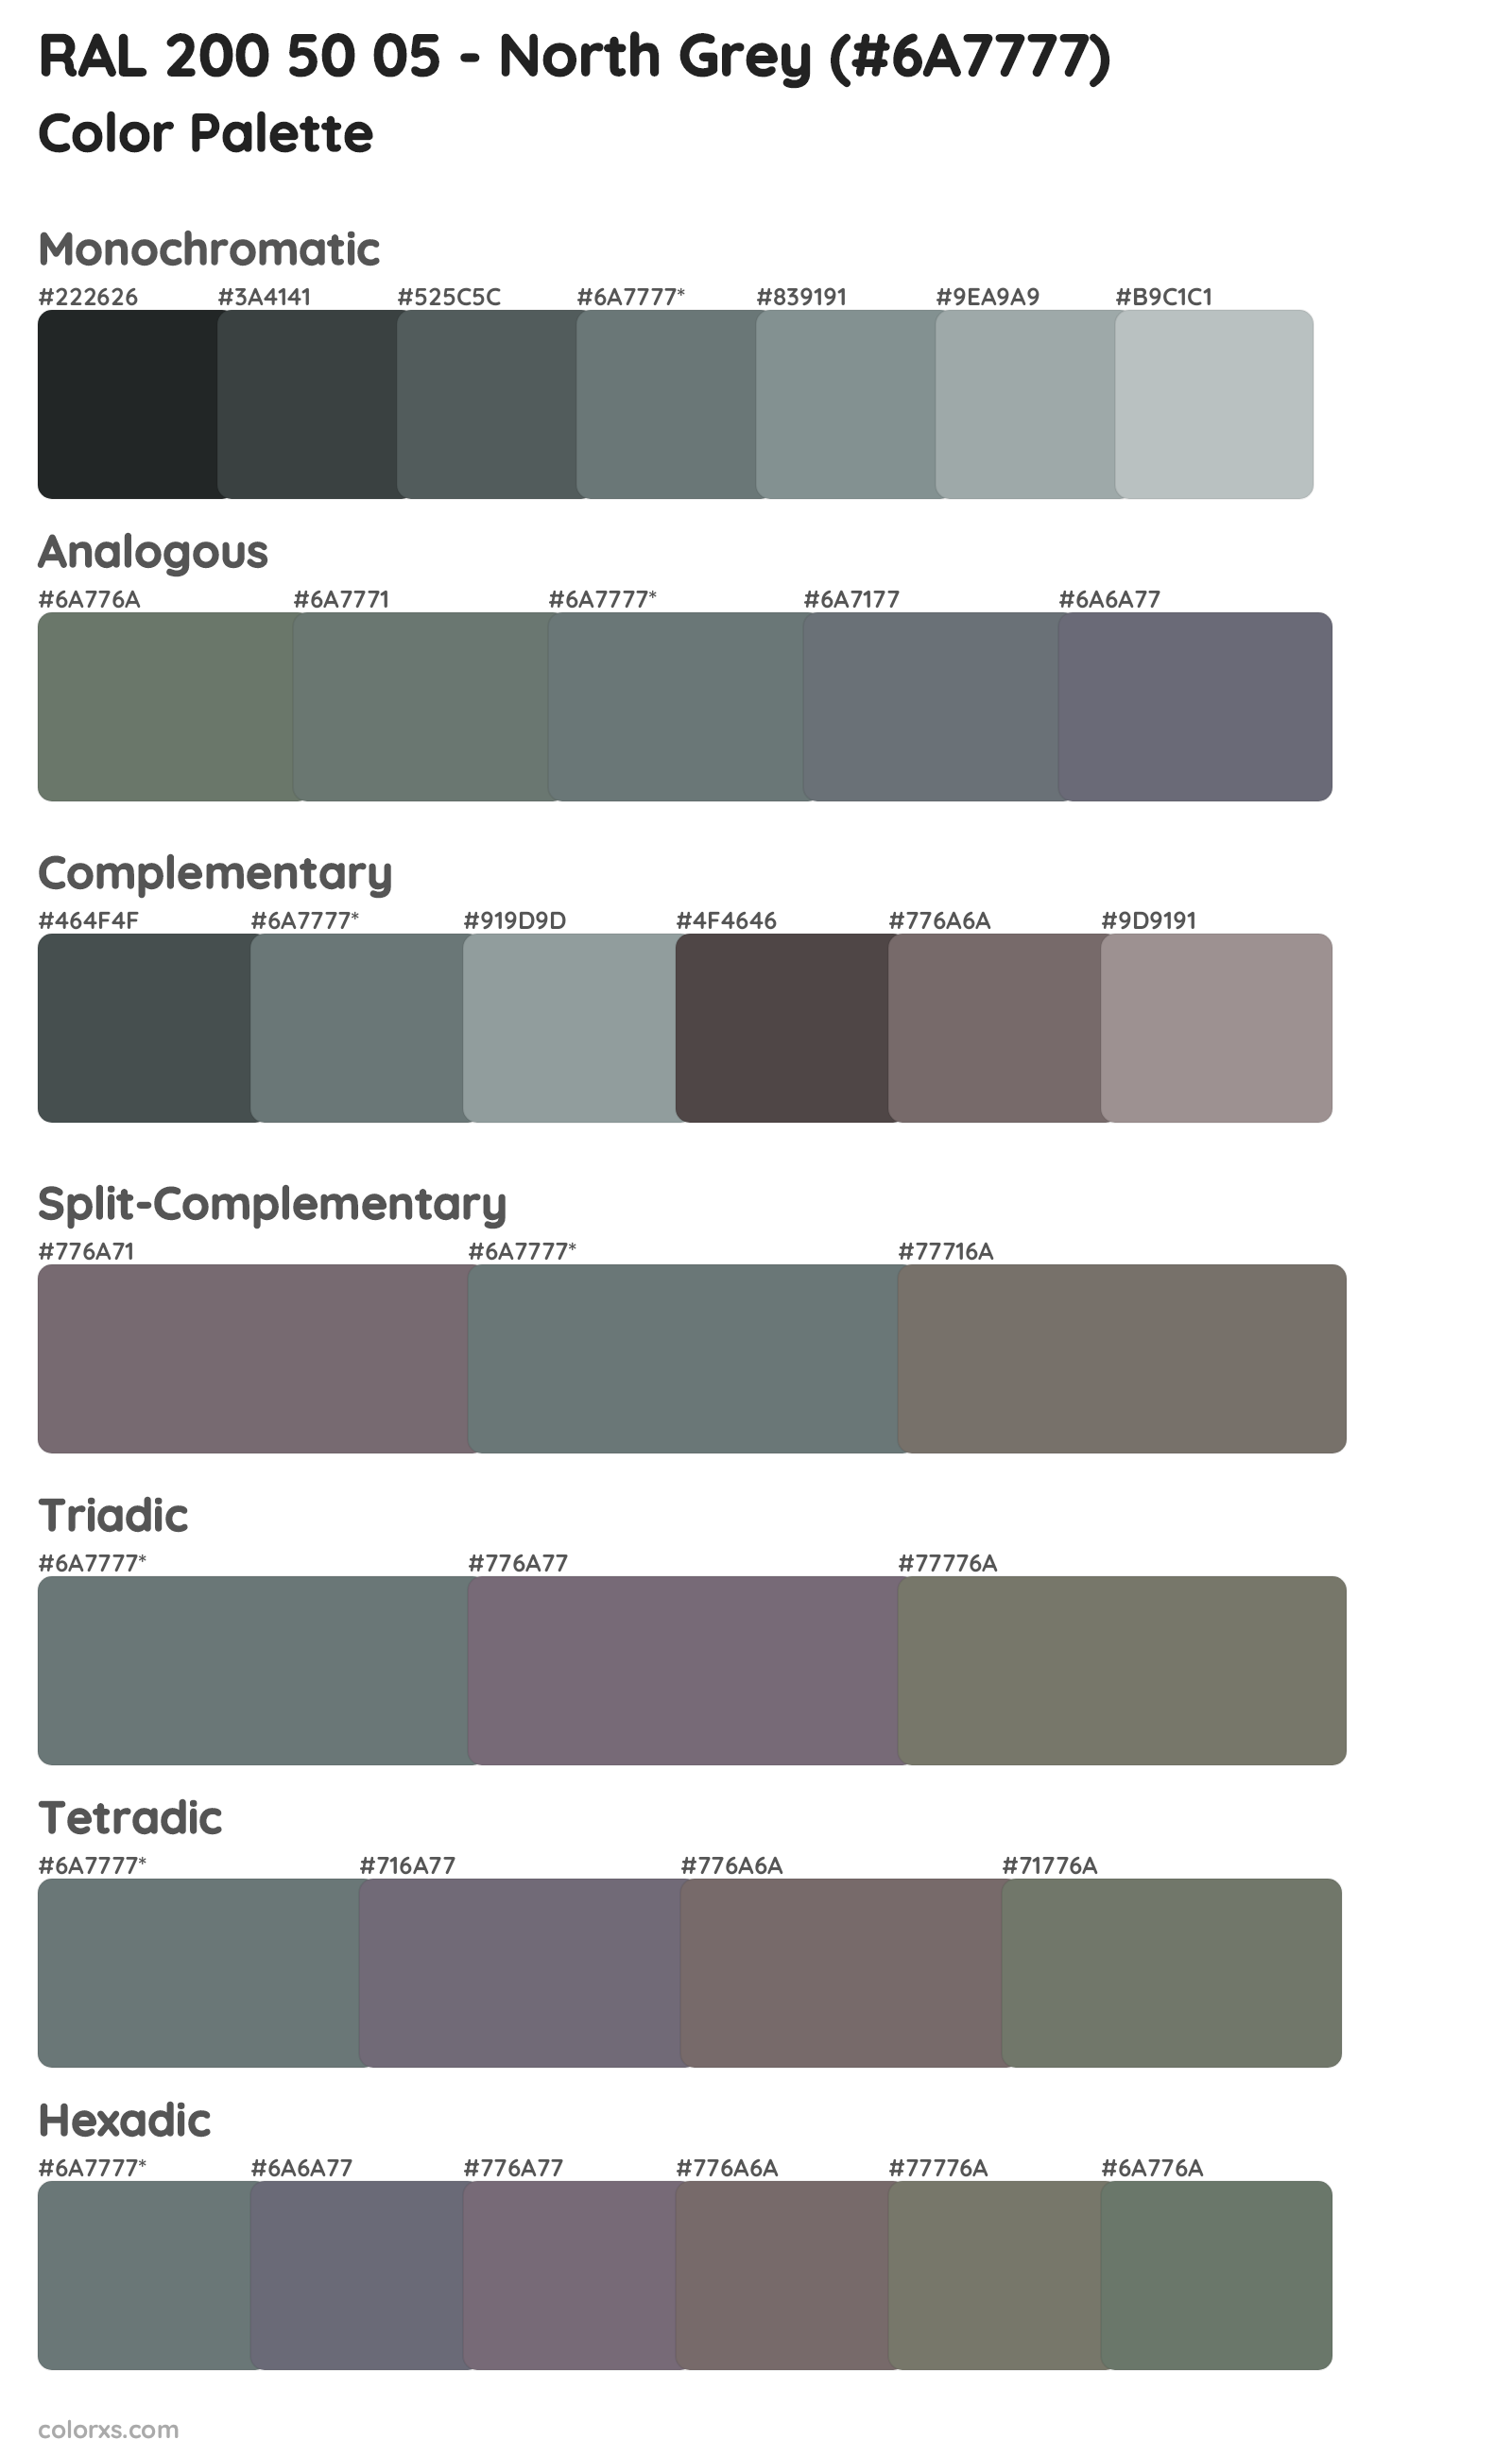 RAL 200 50 05 - North Grey Color Scheme Palettes